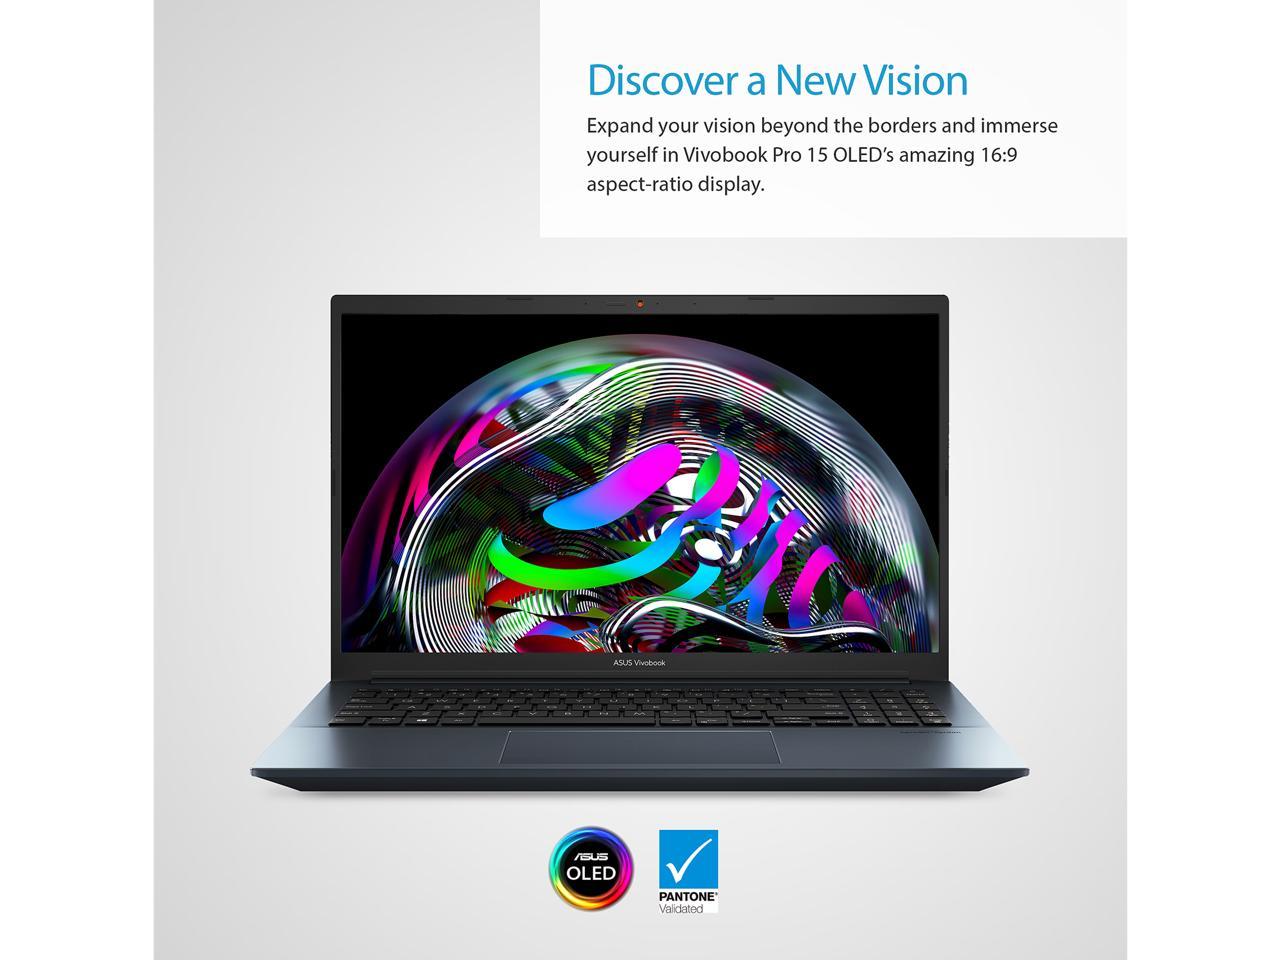 ASUS VivoBook Pro 15 OLED Ultra Slim Laptop, 15.6